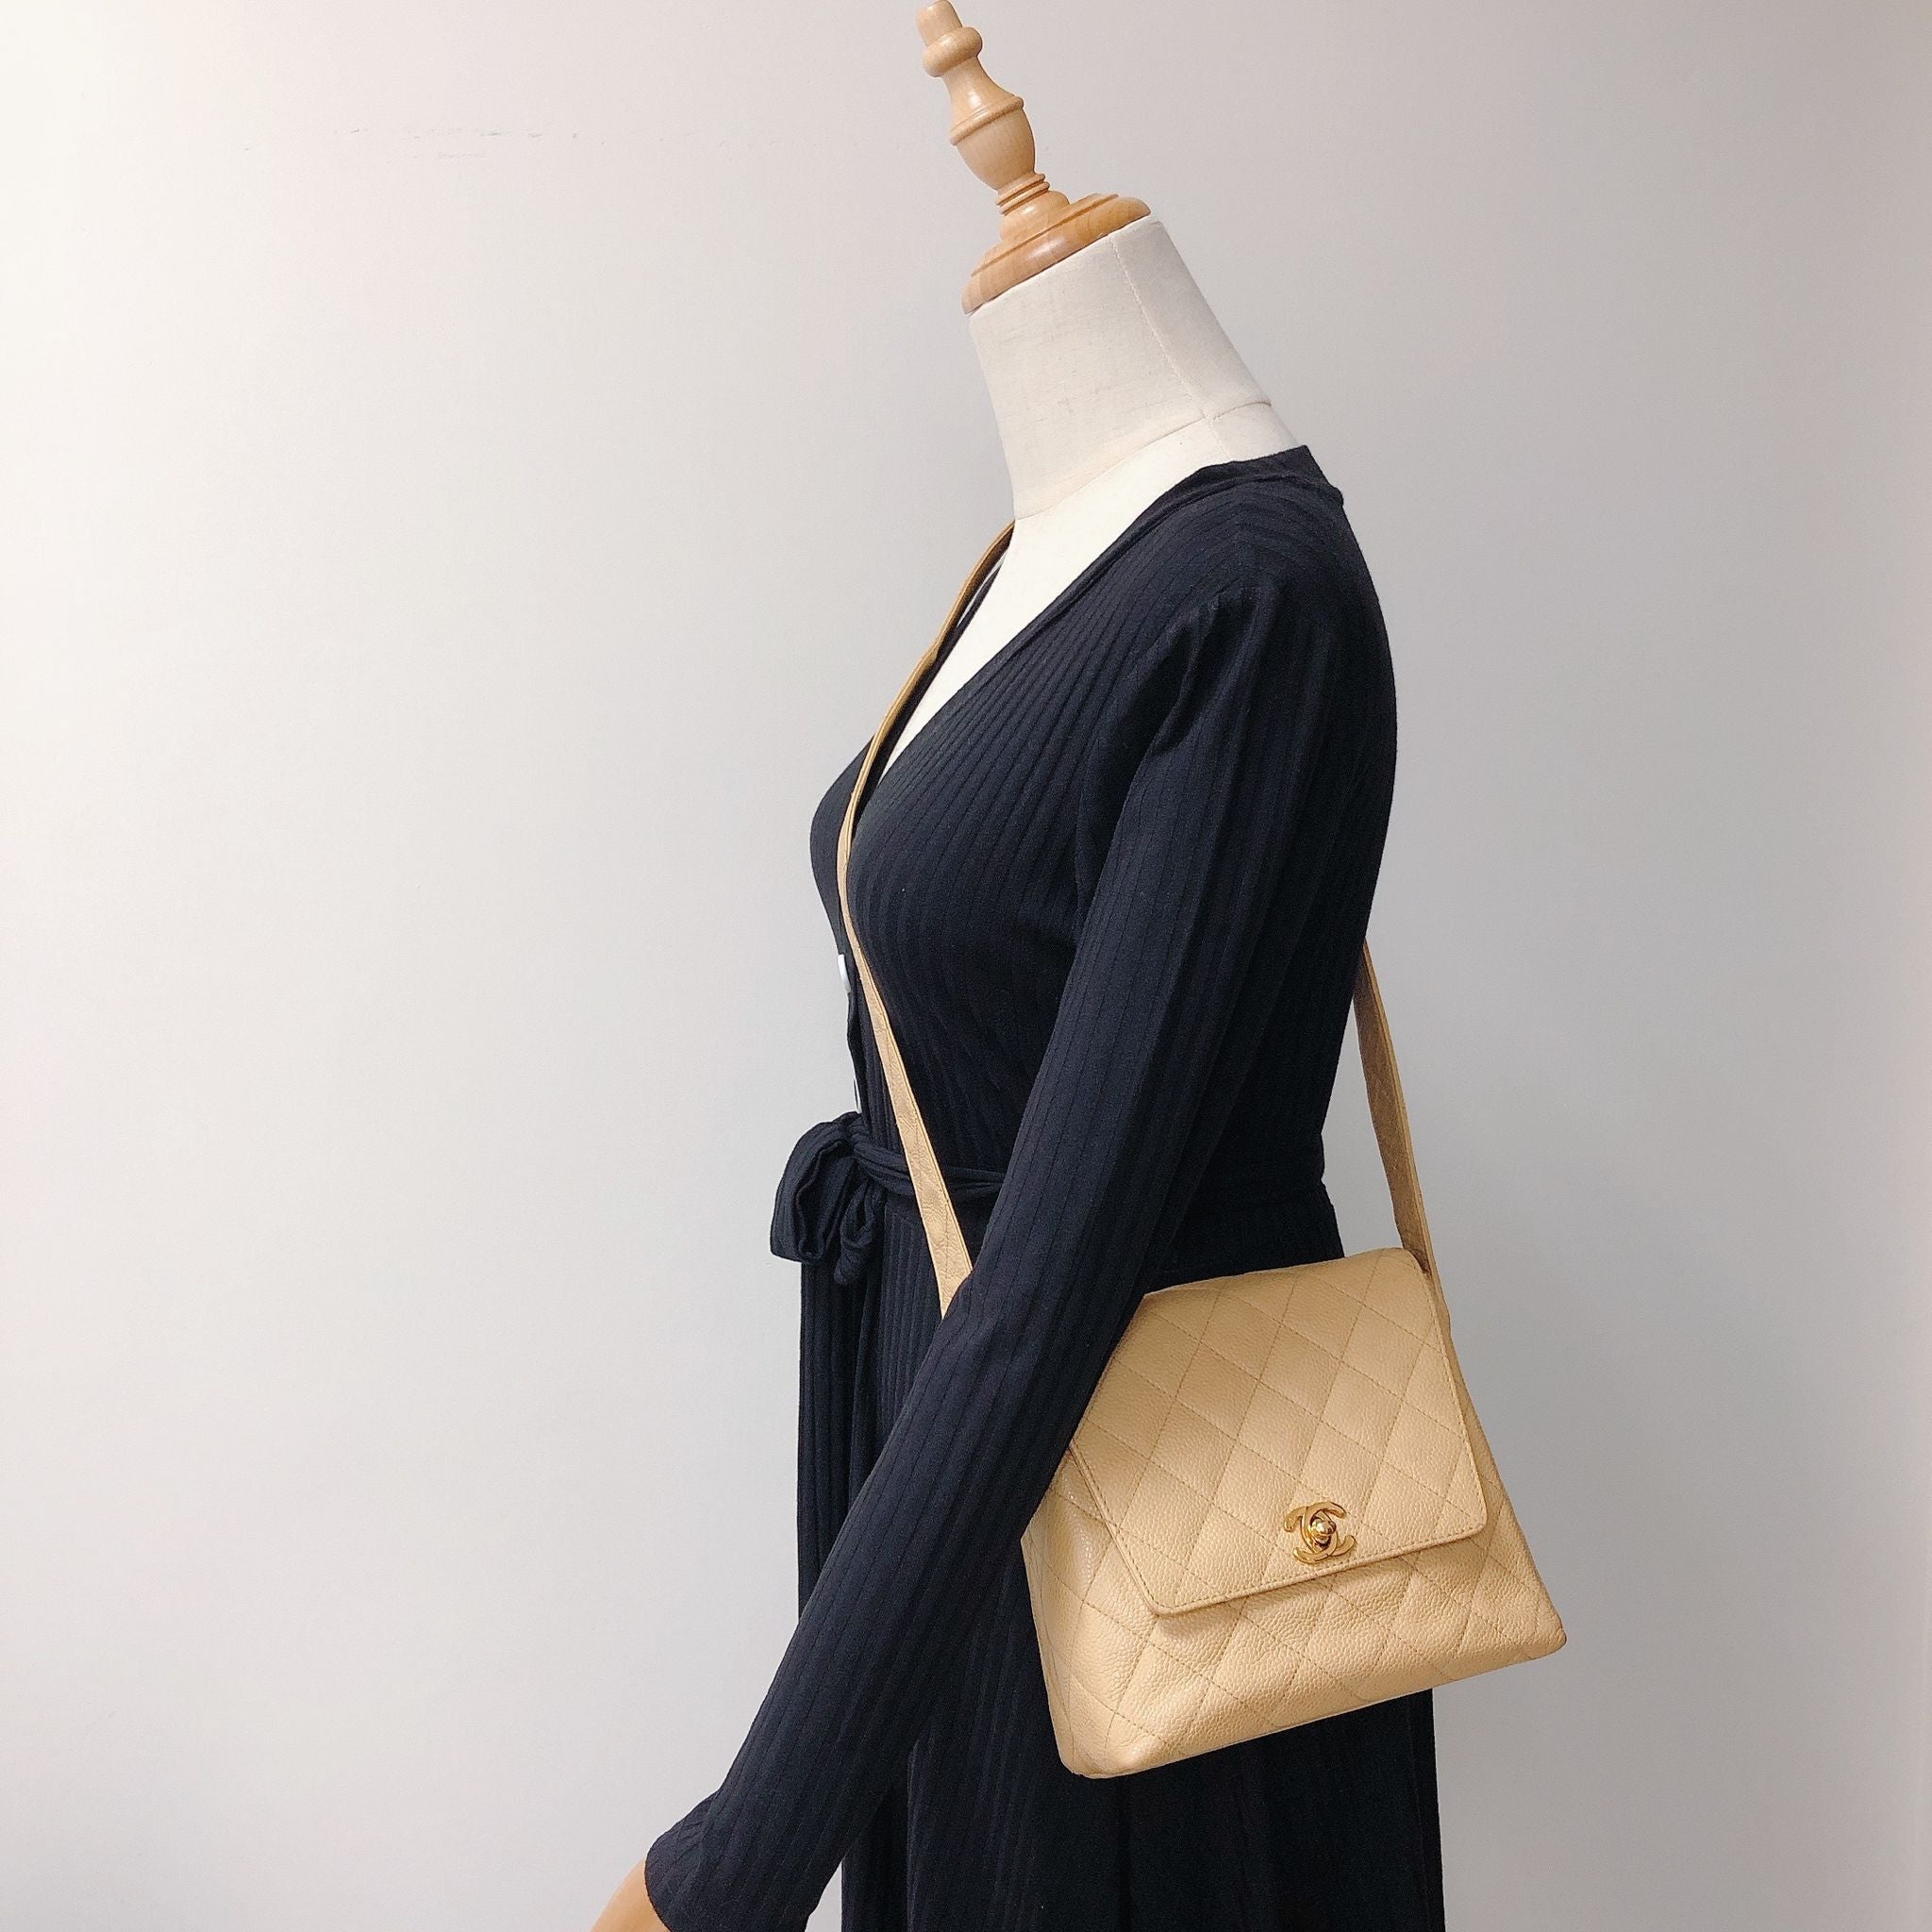 Chanel Vintage Crossbody Bag